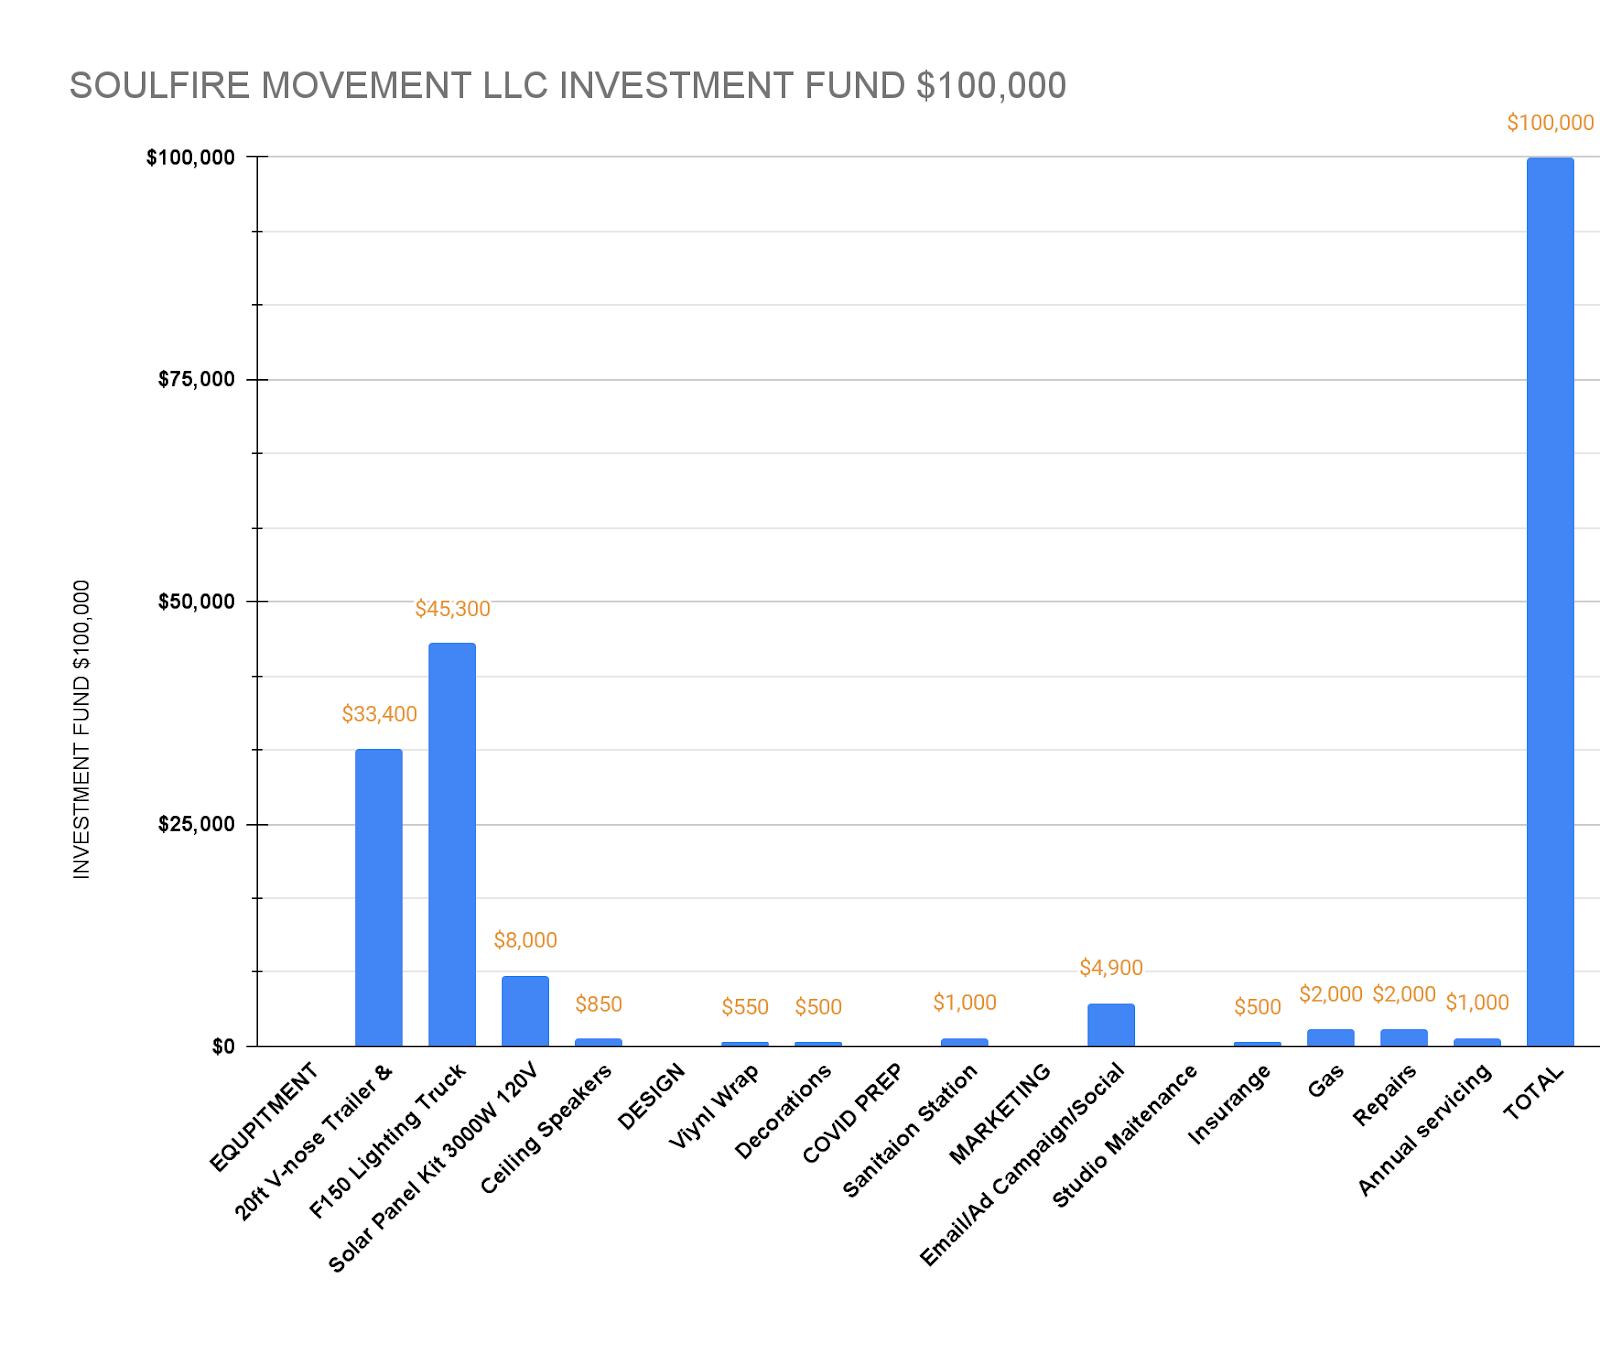 SOULFIRE MOVEMENT LLC INVESTMENT FUND $100,000 